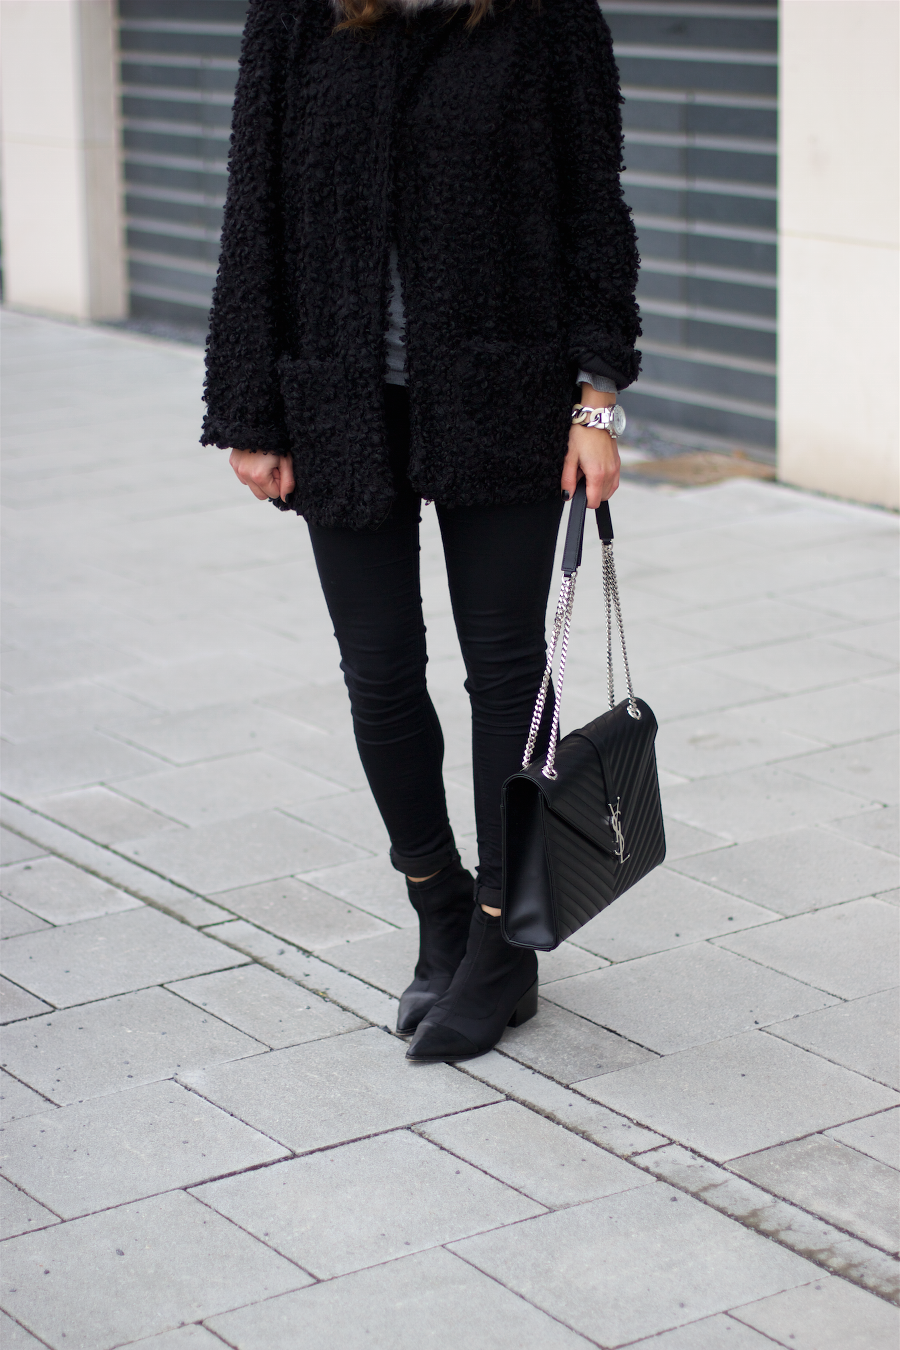 Black Fluffy Coat YSL Bag Outfit